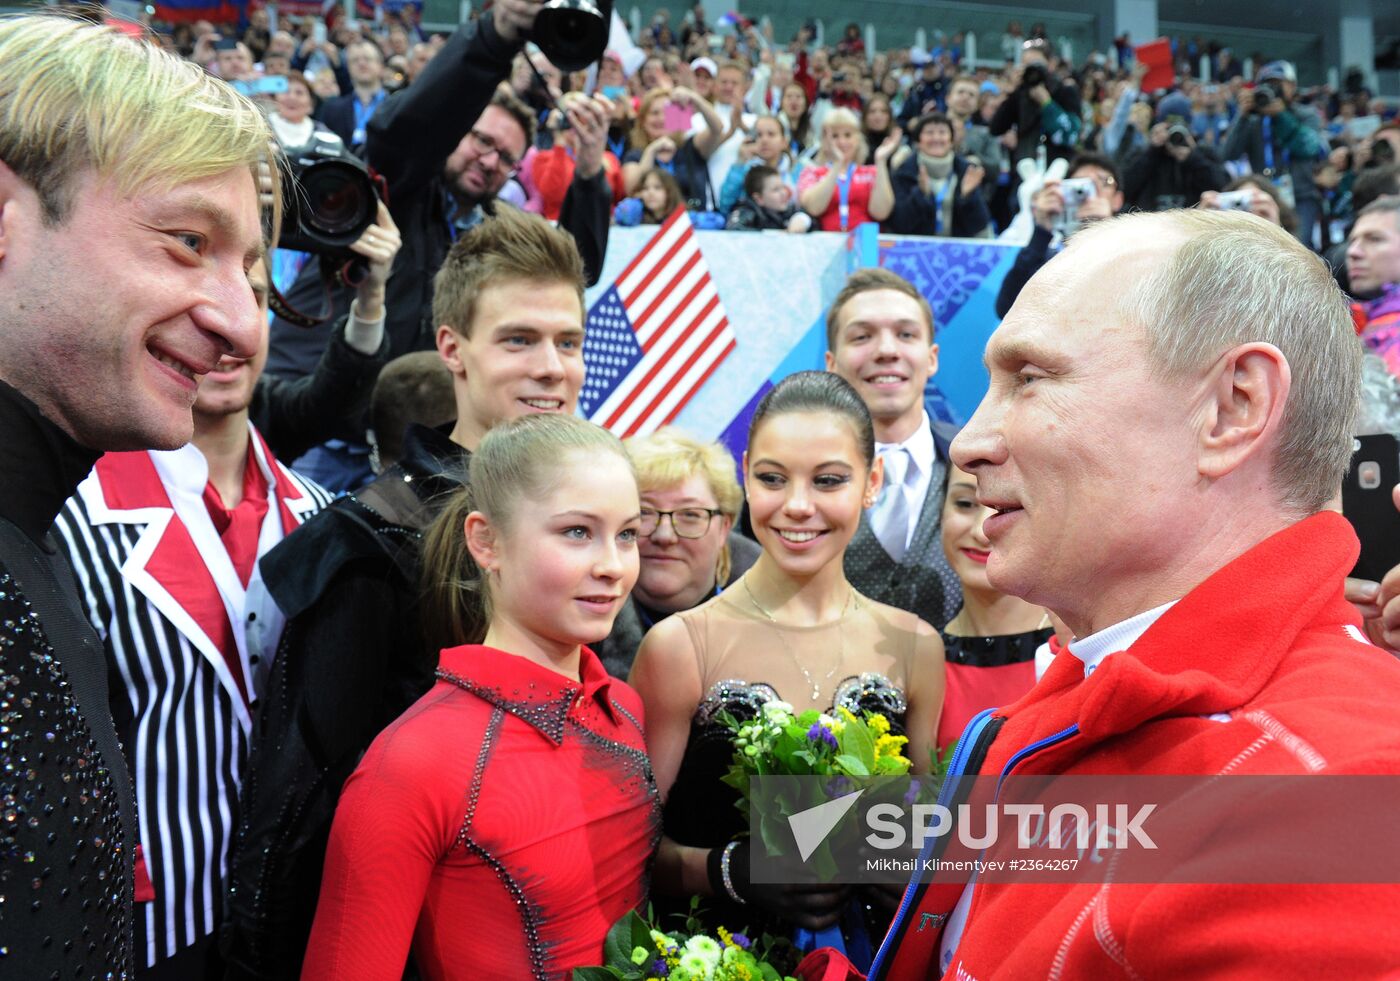 Vladimir Putin attends figure skating competition